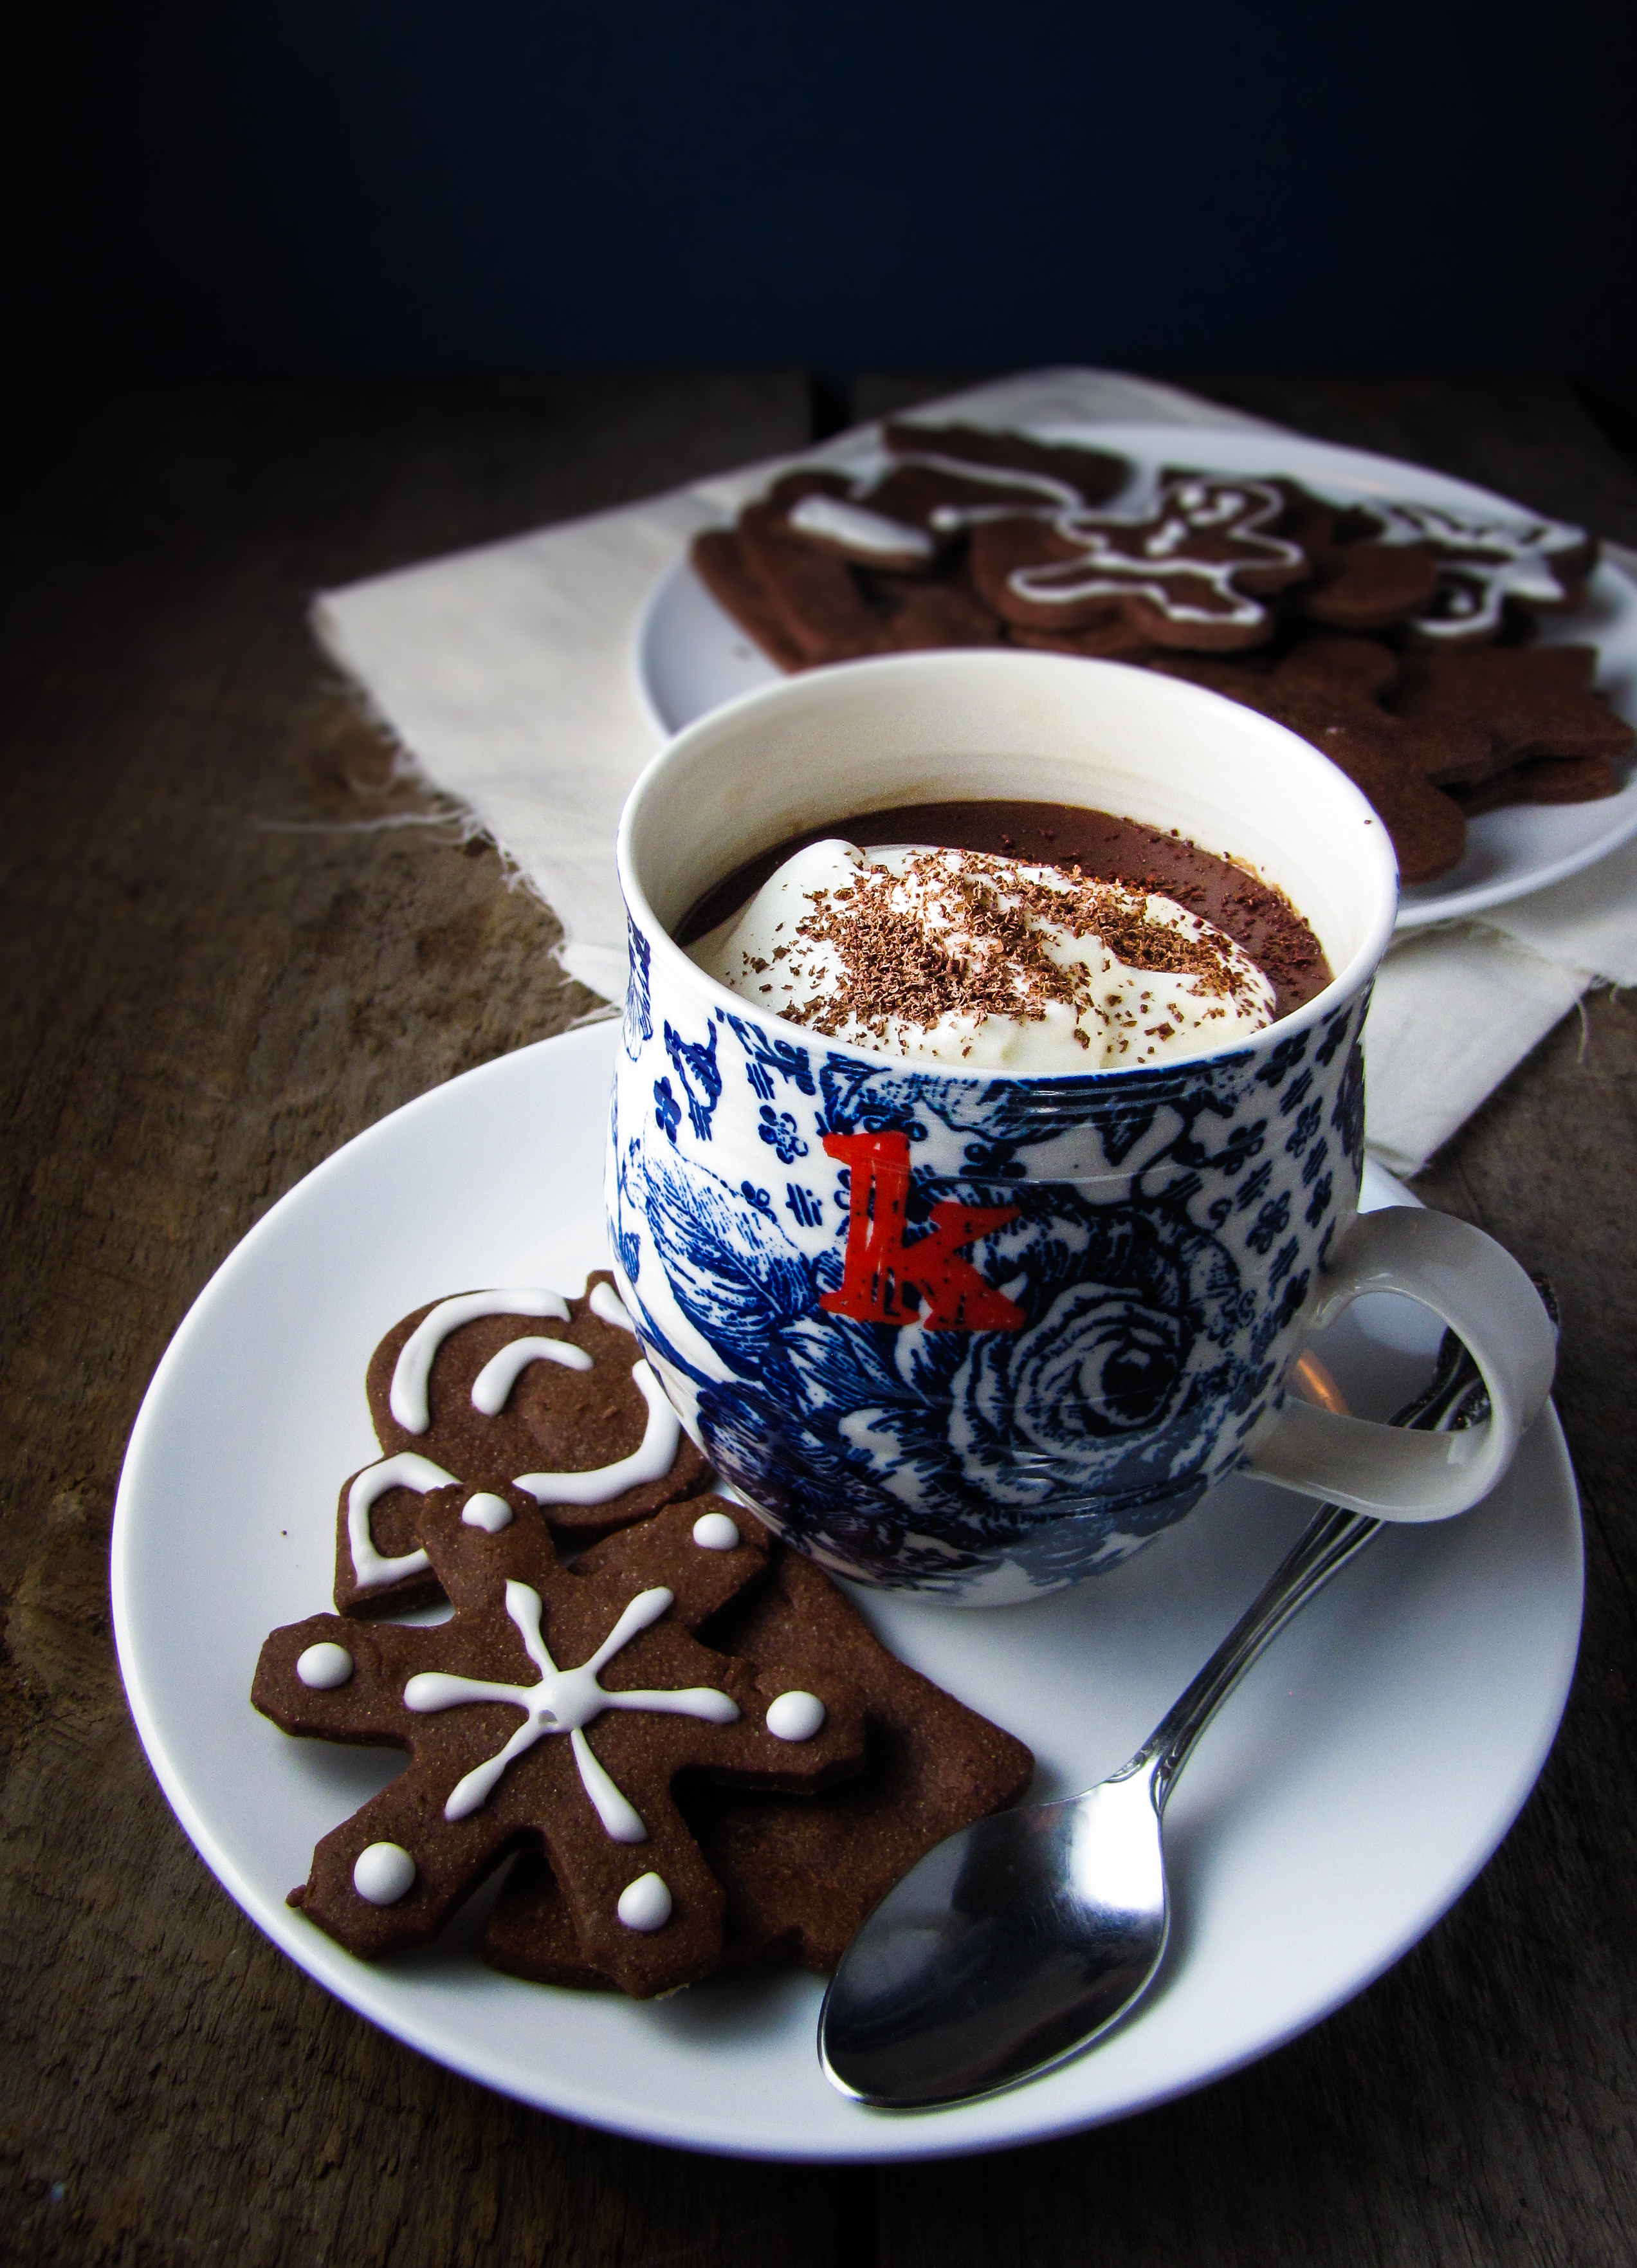 Memories of Prague, Hot Chocolate, and Cookies